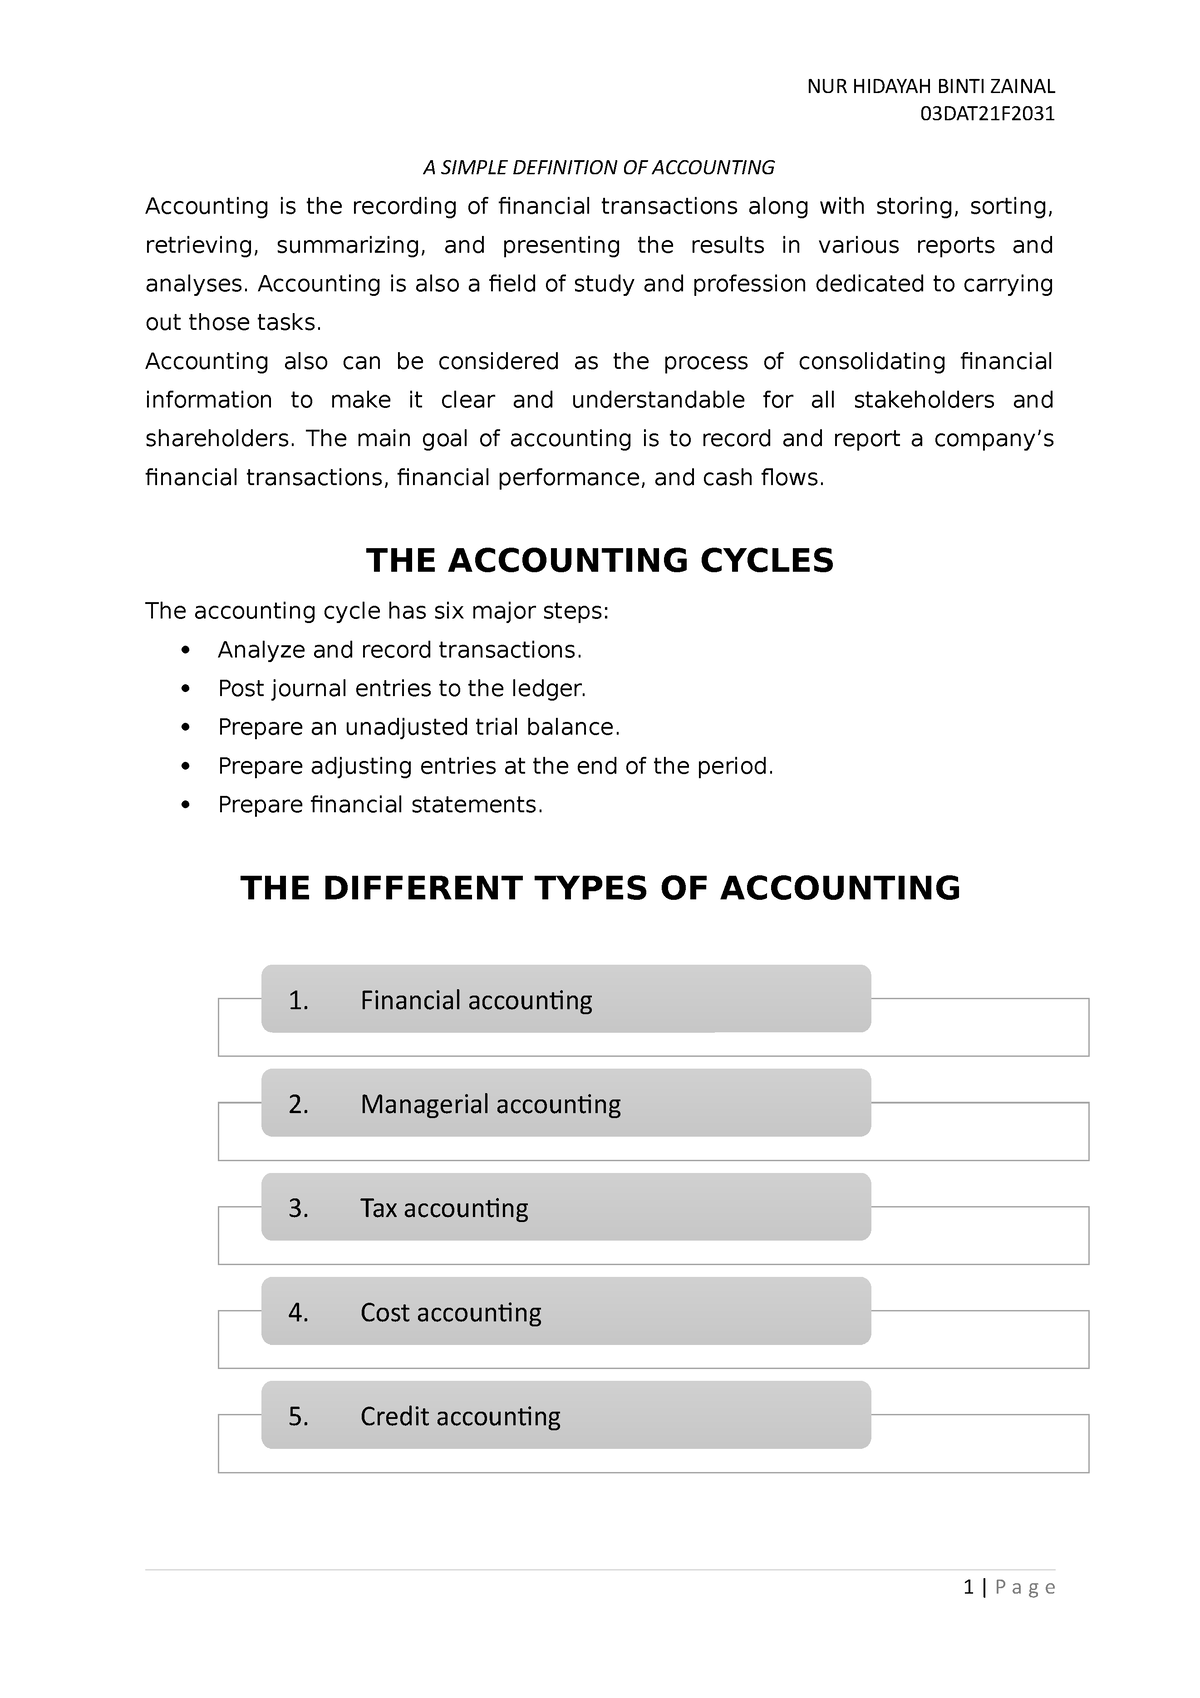 a-simple-definition-of-accounting-nur-hidayah-binti-zainal-03dat21f-a